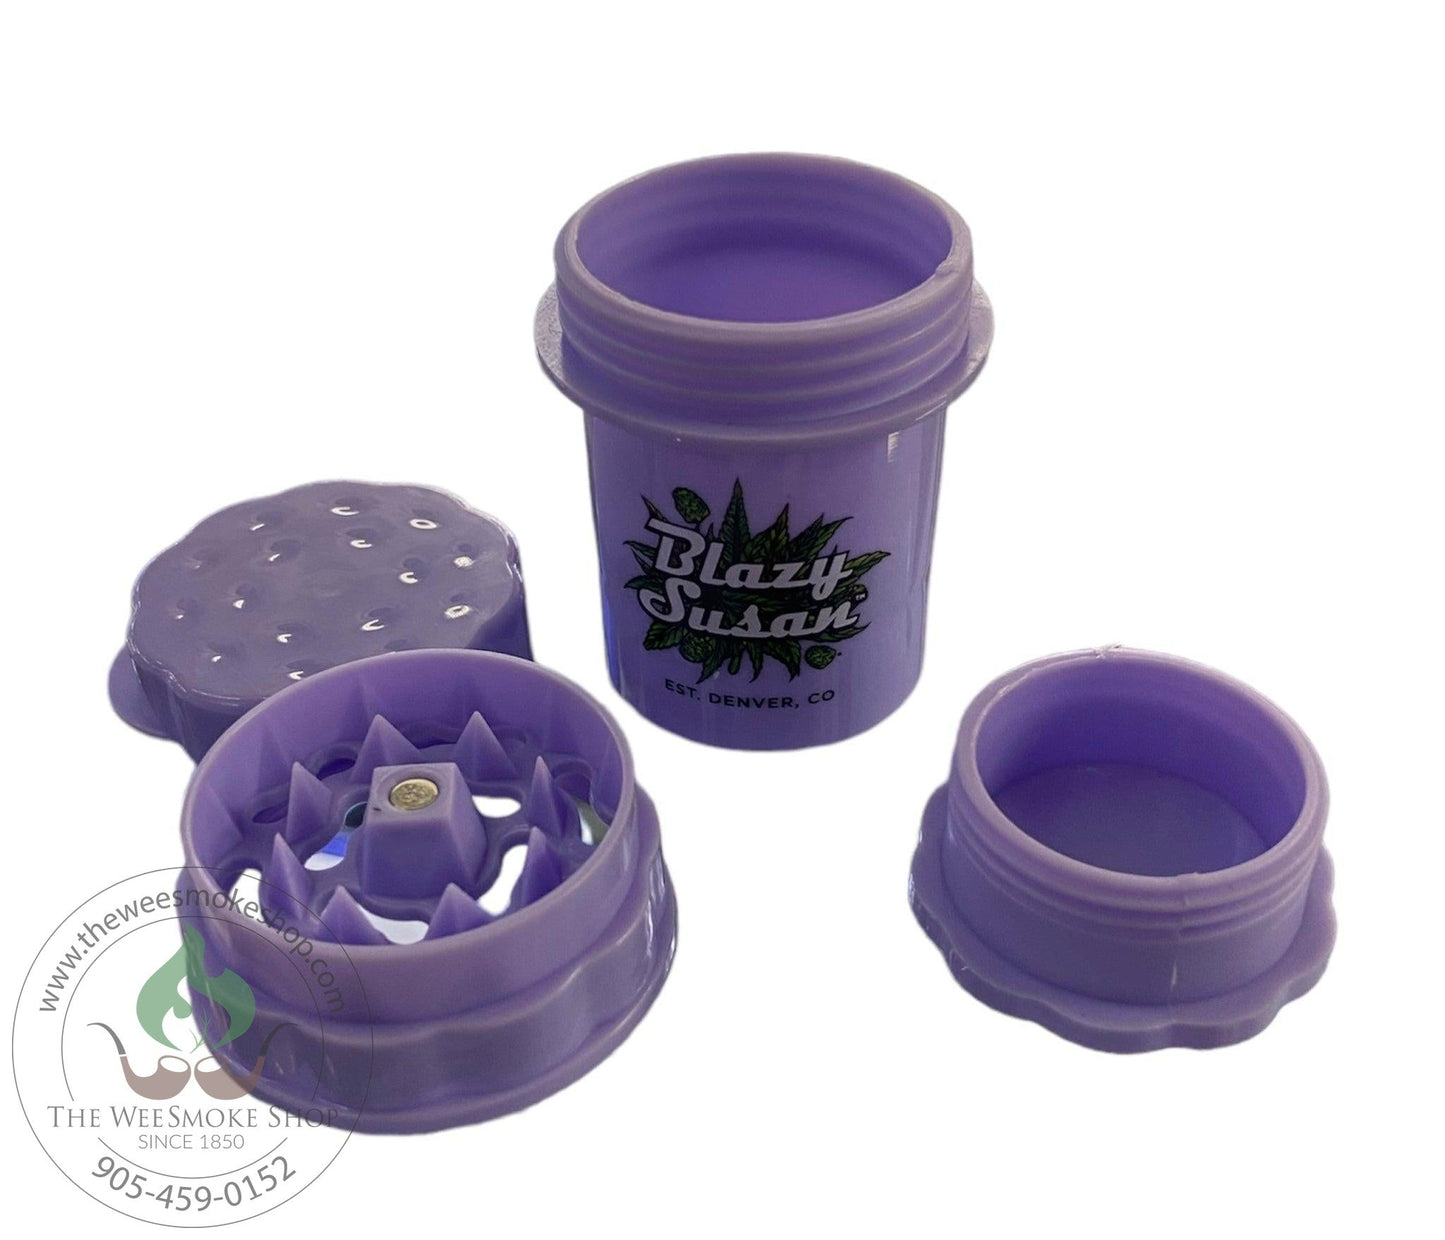 '-BSmall Purple-Blazy Susan 4-Part Herb Saver Grinder-The Wee Smoke Shop